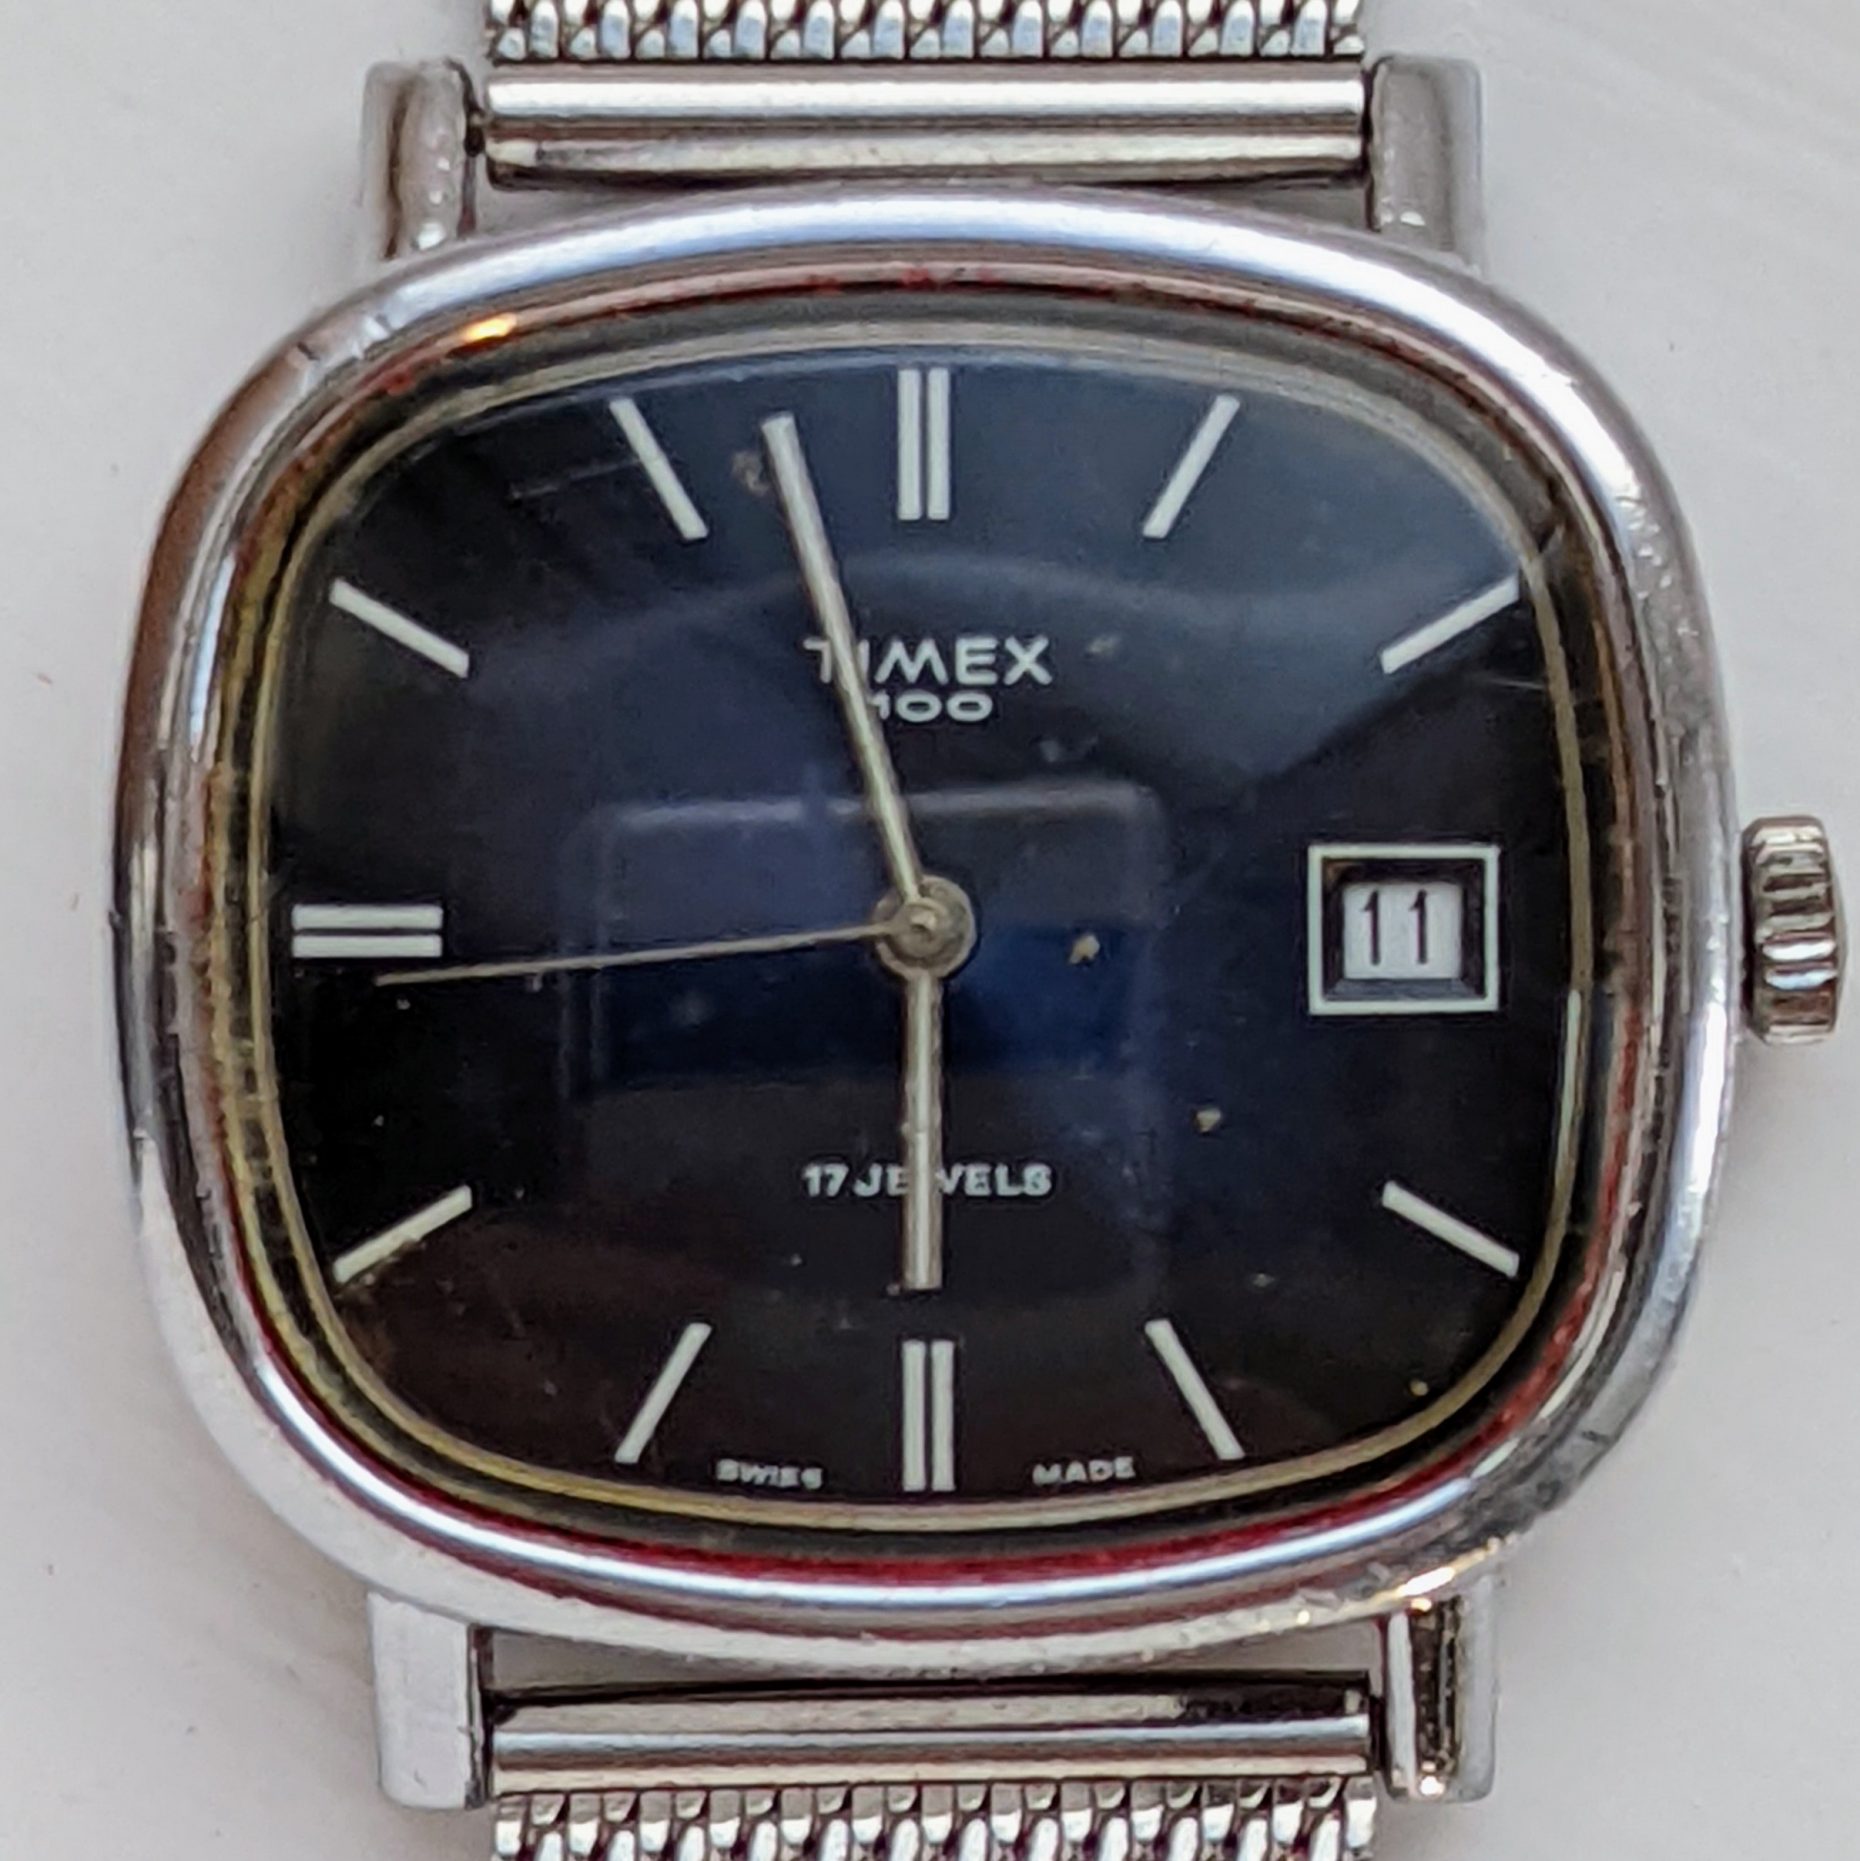 Timex 100 1975 Ref. 66750 18175